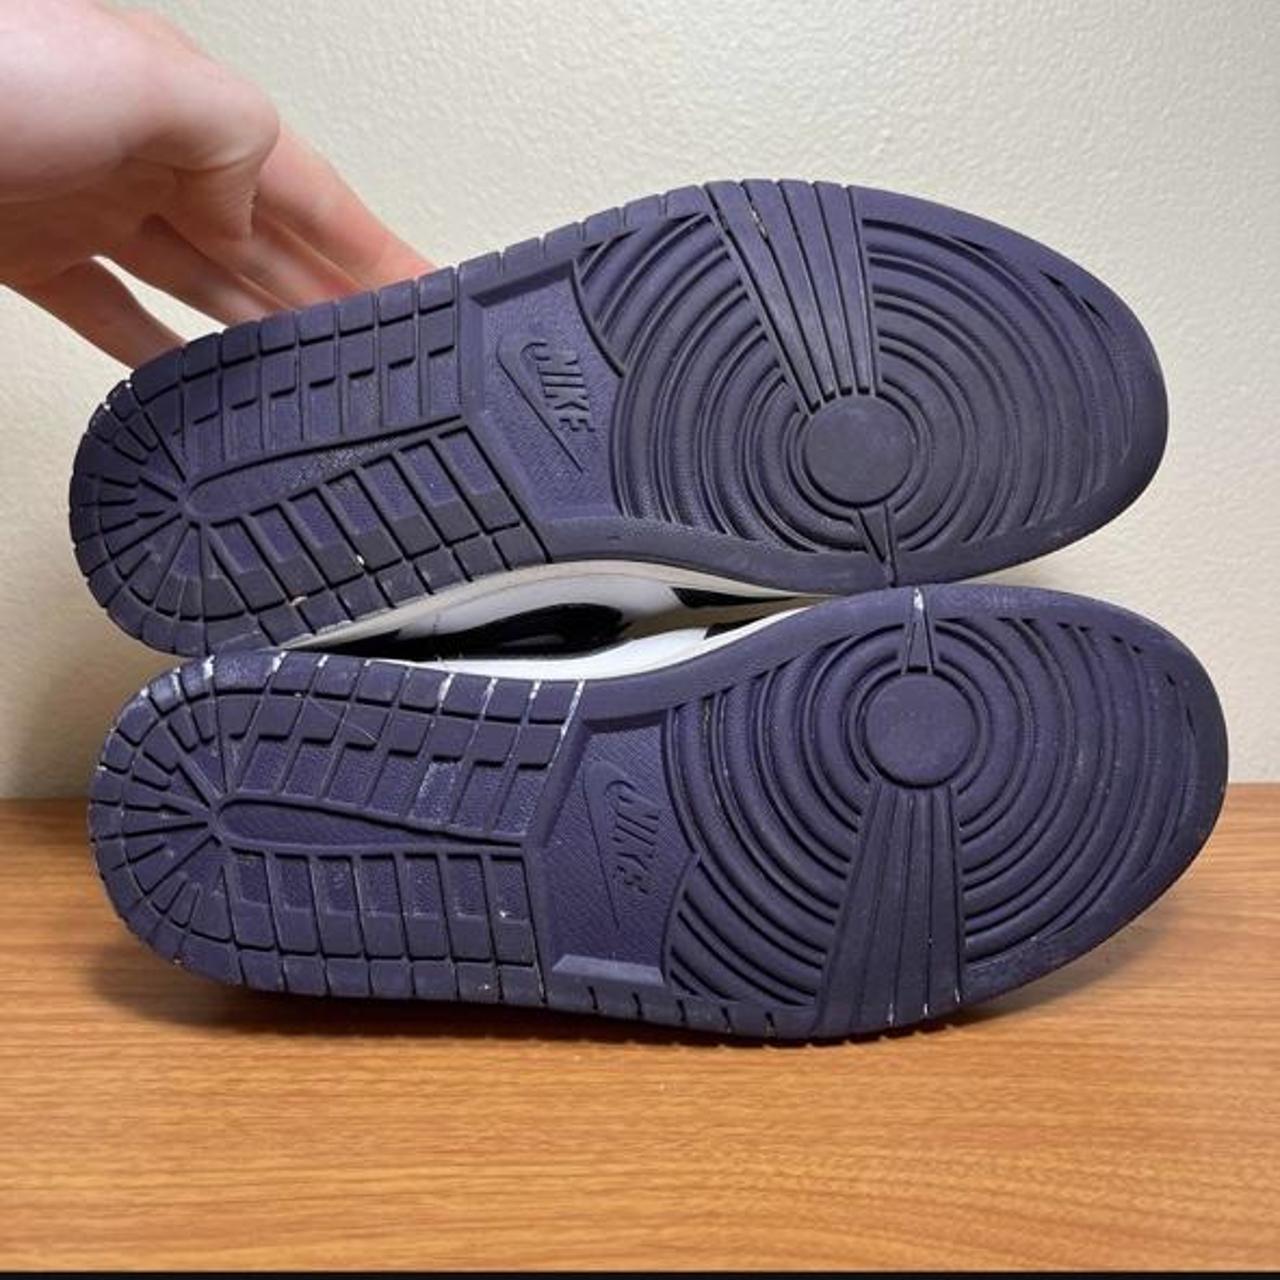 Nike Air Jordan 1 Retro Low Court Purple Size 9.5... - Depop